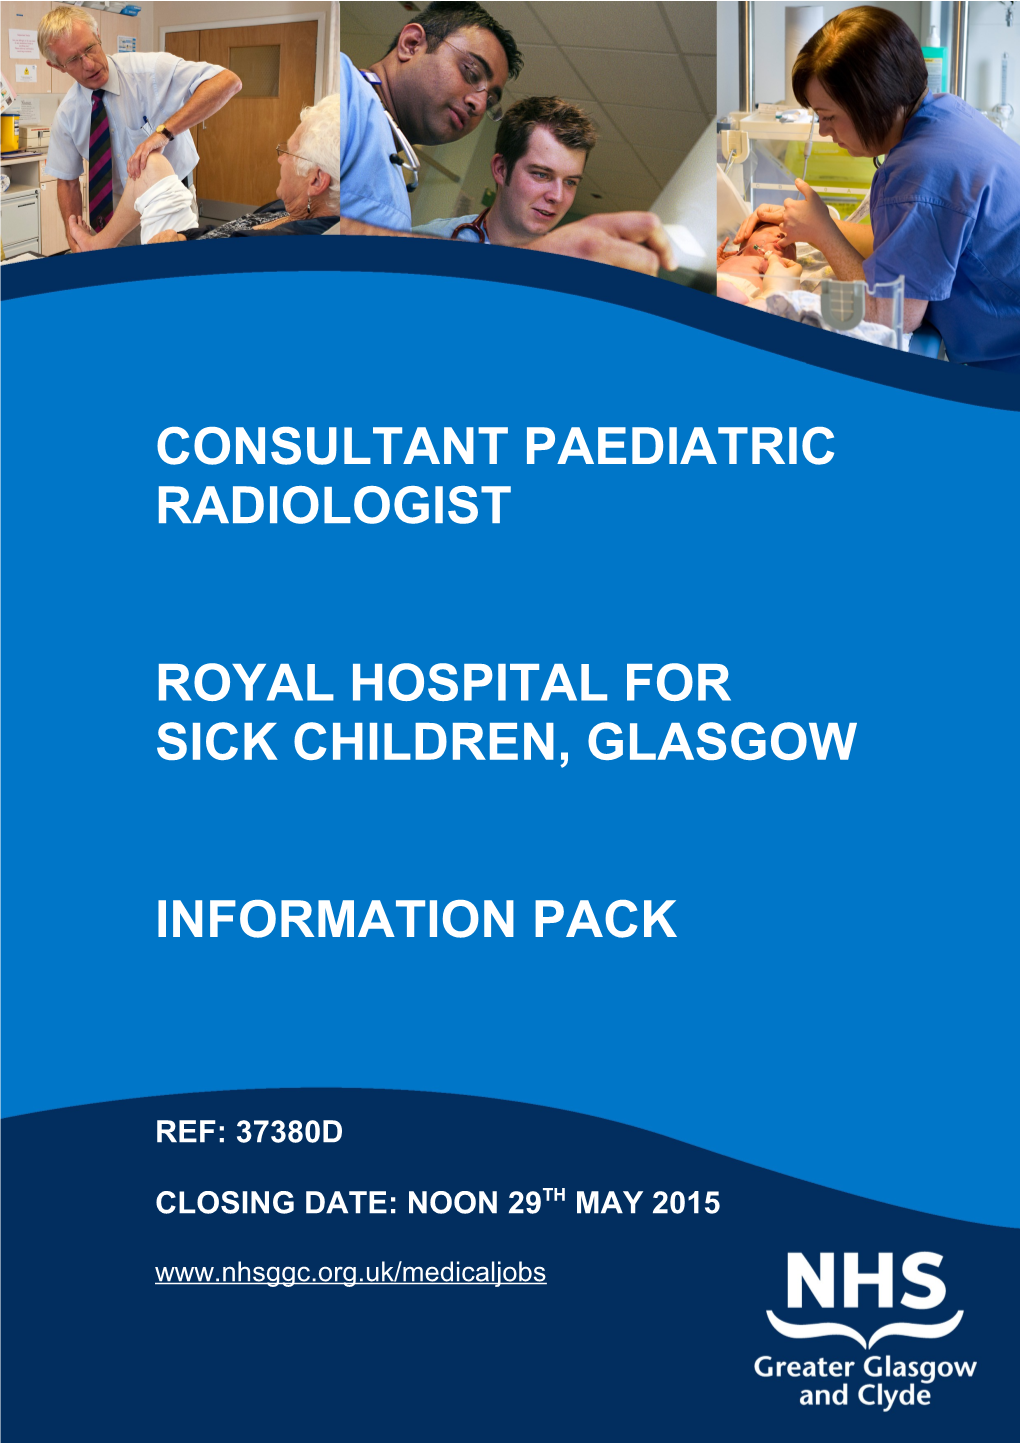 Royalhospital for Sick Children, Glasgow